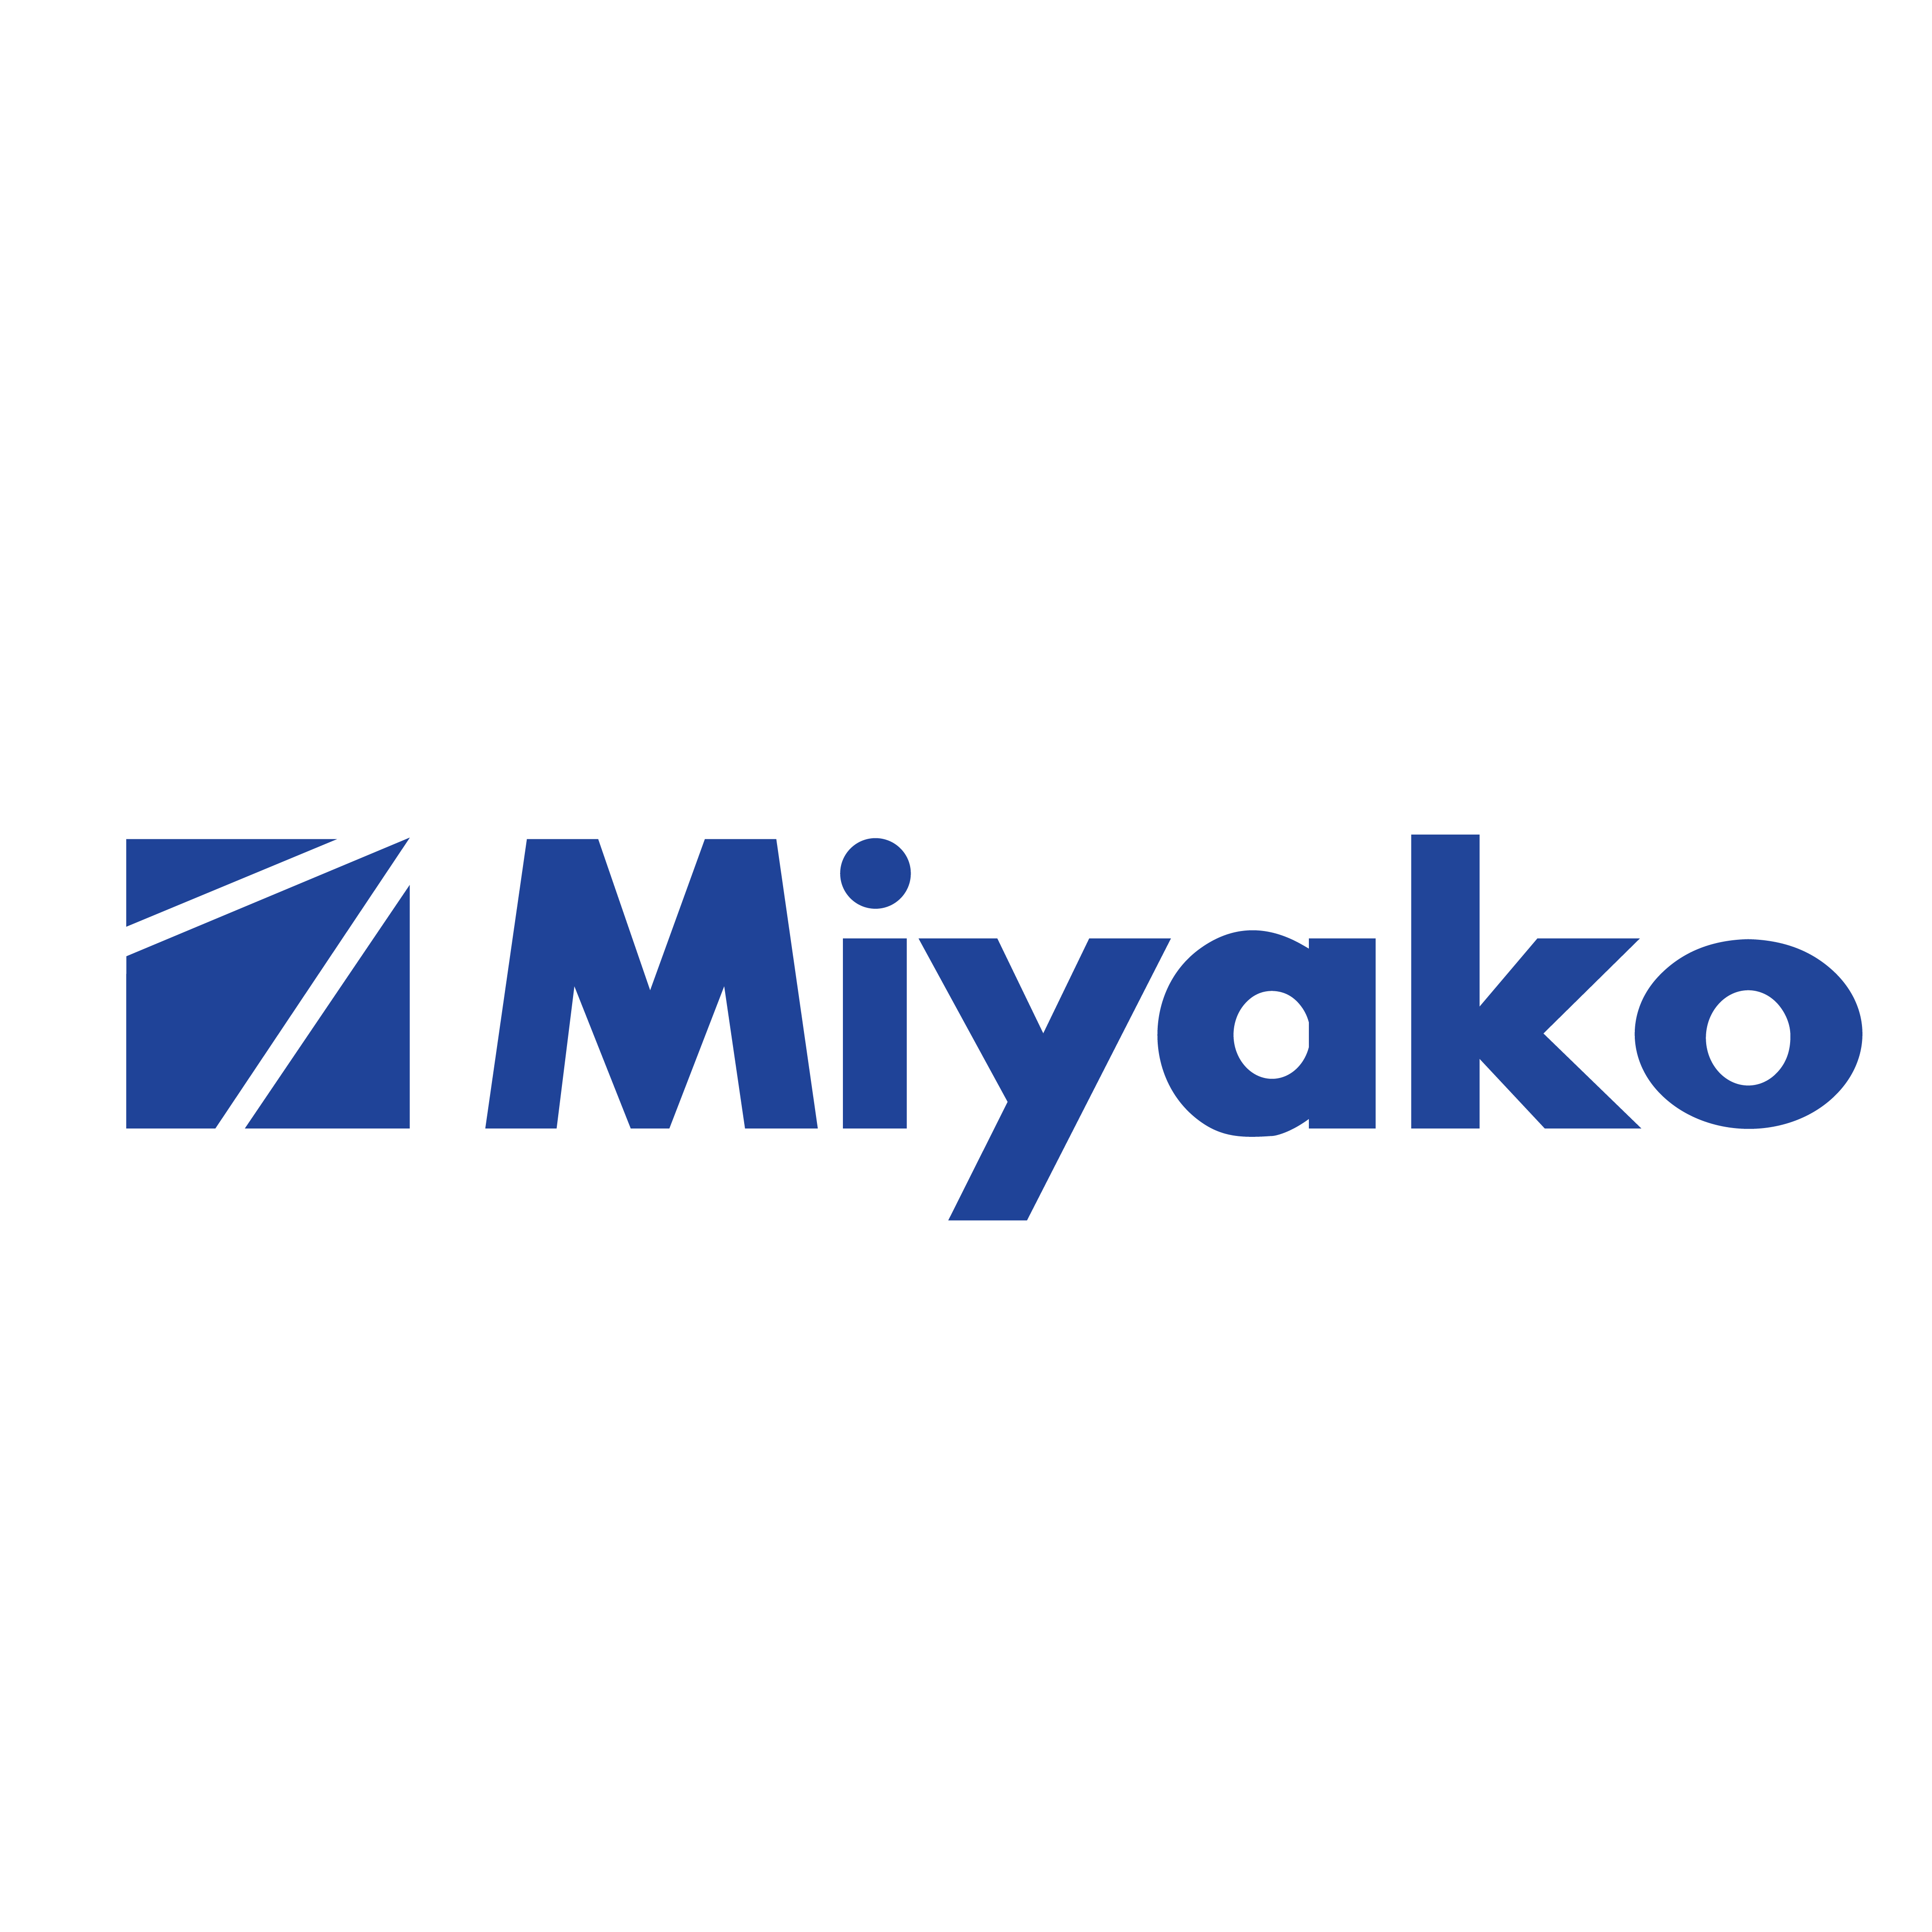 Official Store Online Miyako Resmi Indonesia | Blibli.com